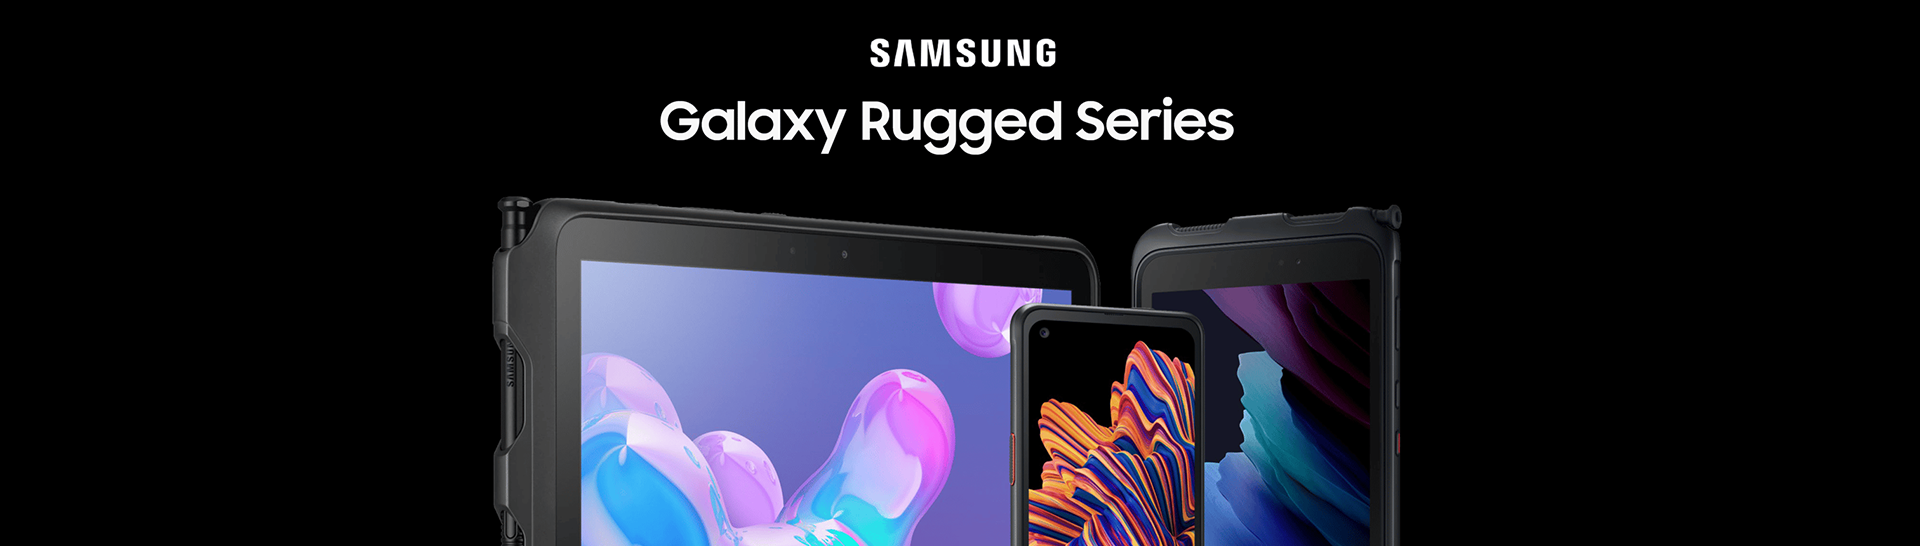 Samsung Galaxy rugged series resized